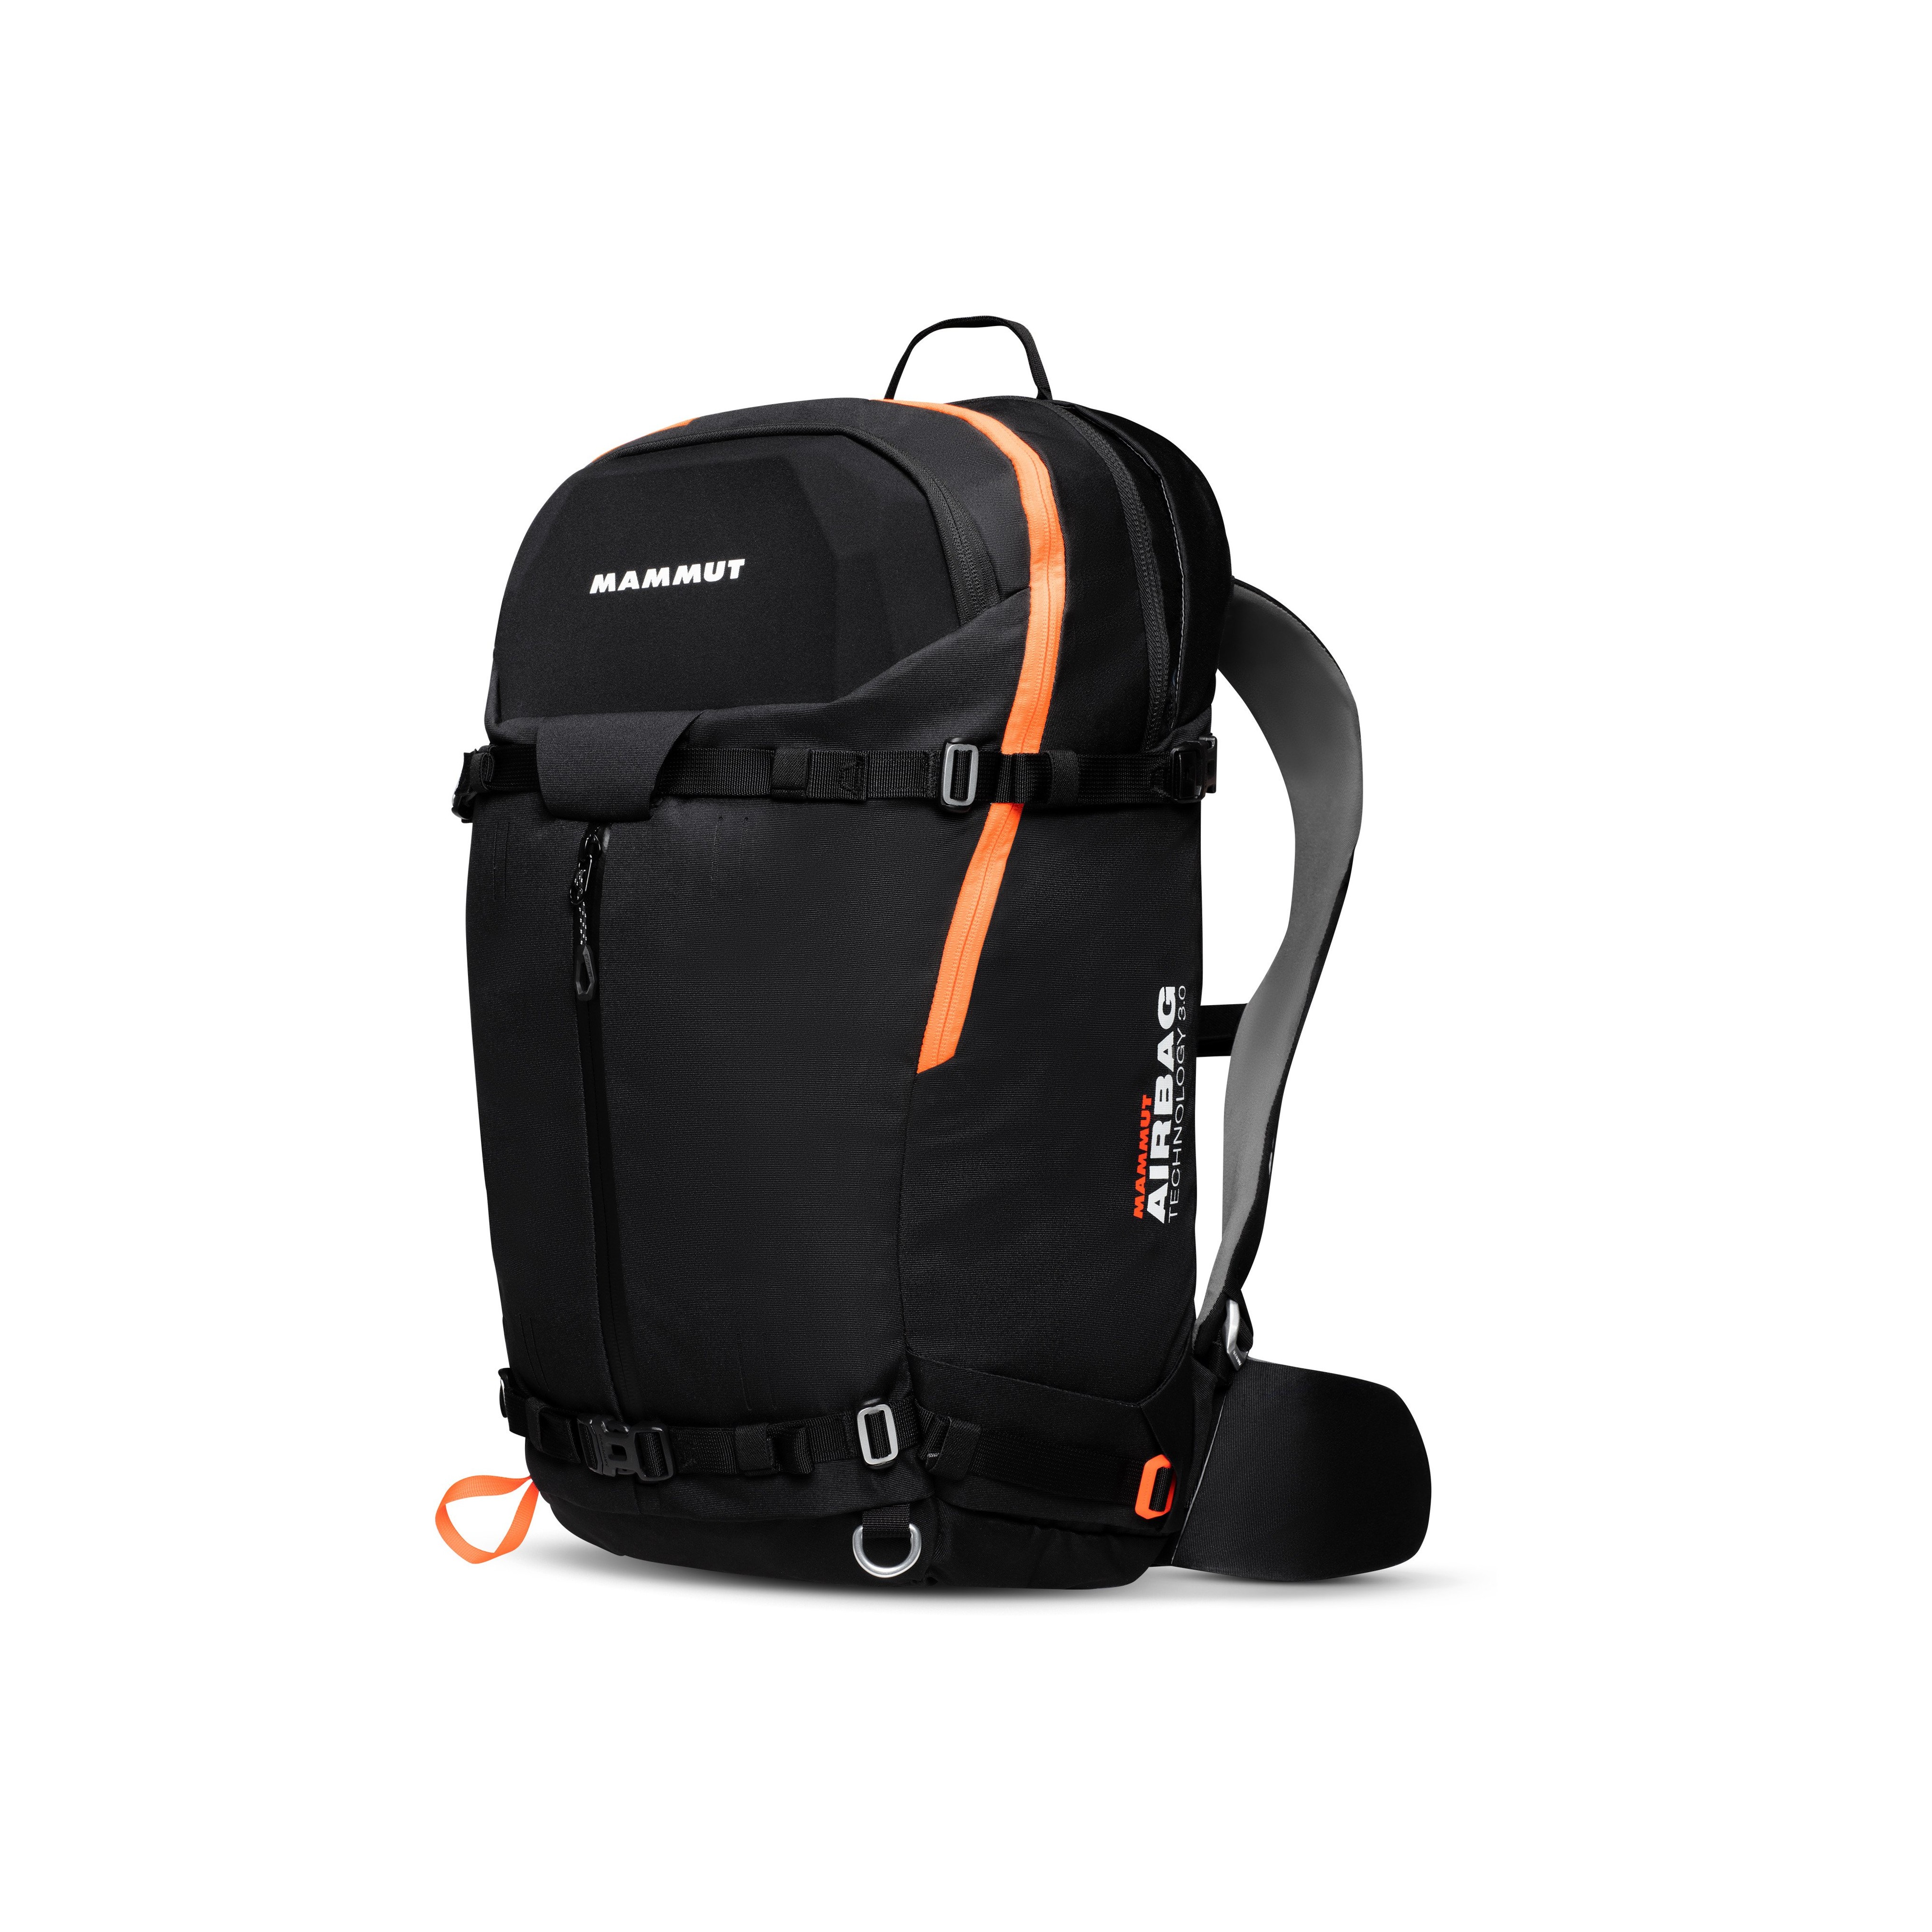 Pro X Removable Airbag 3.0 - black-vibrant orange, 35 L product image